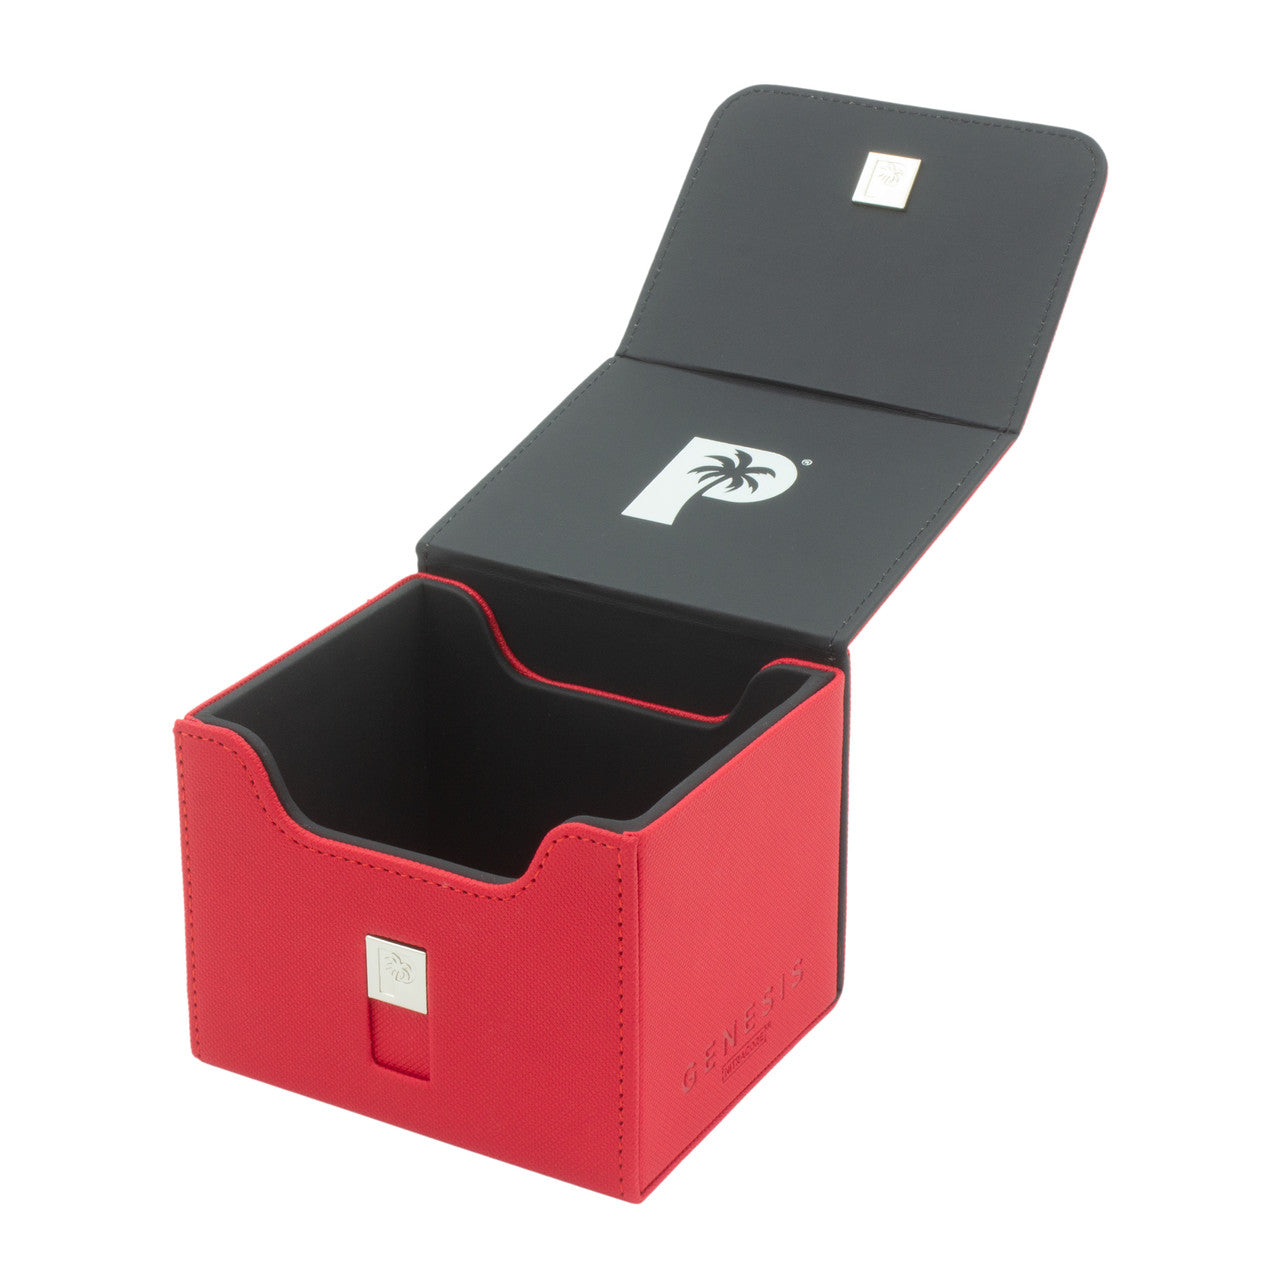 Palms Off Gaming Genesis Deck Box - Red